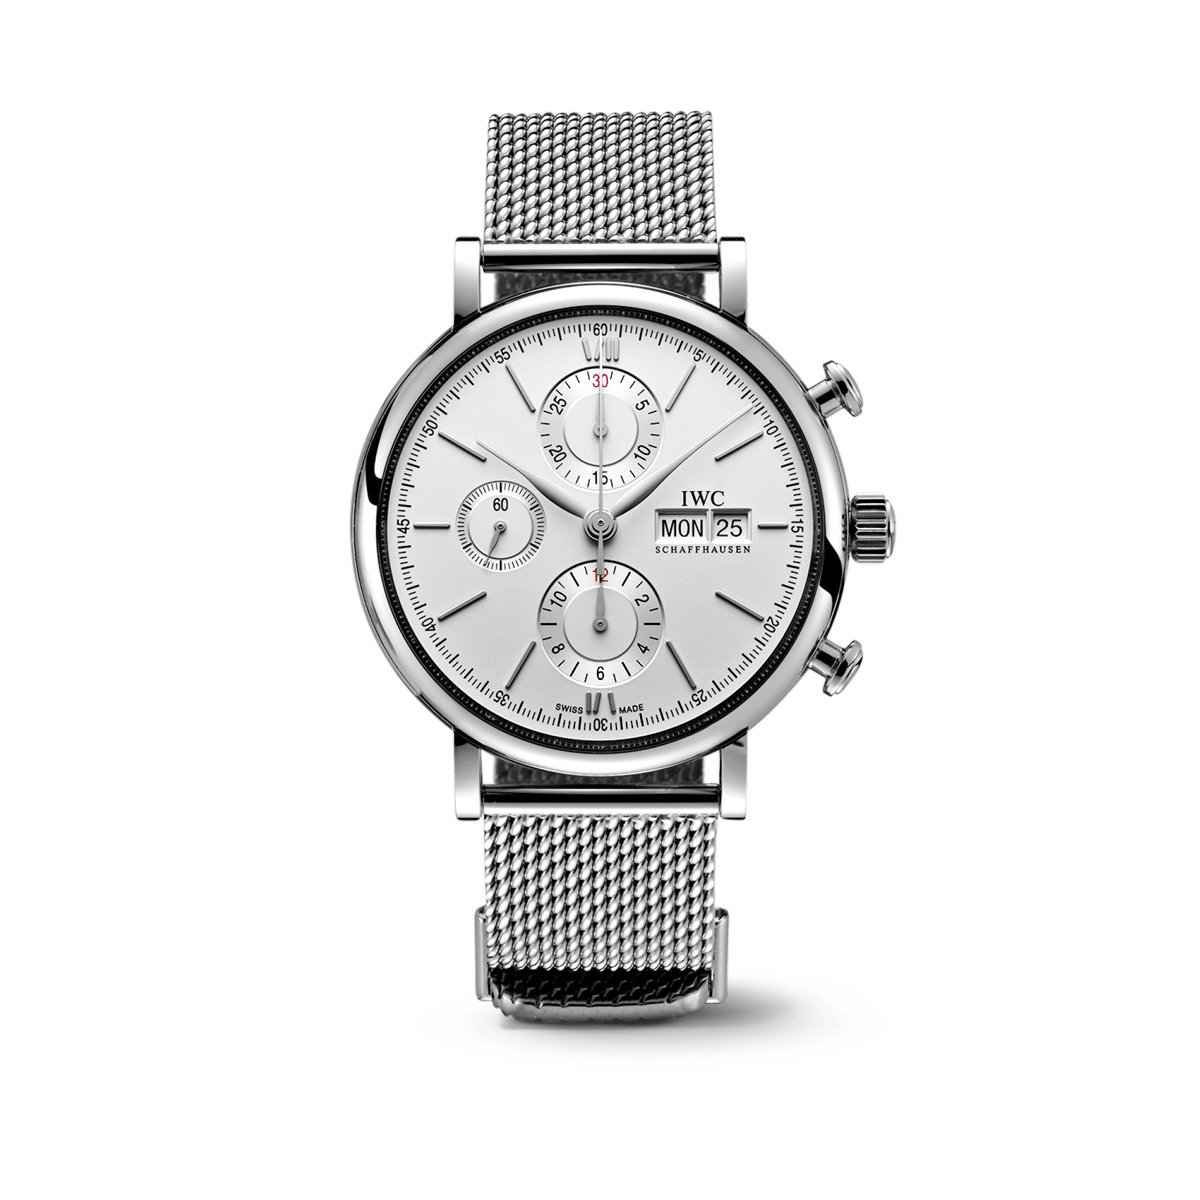 Portofino Steel Chronograph 42mm Watch